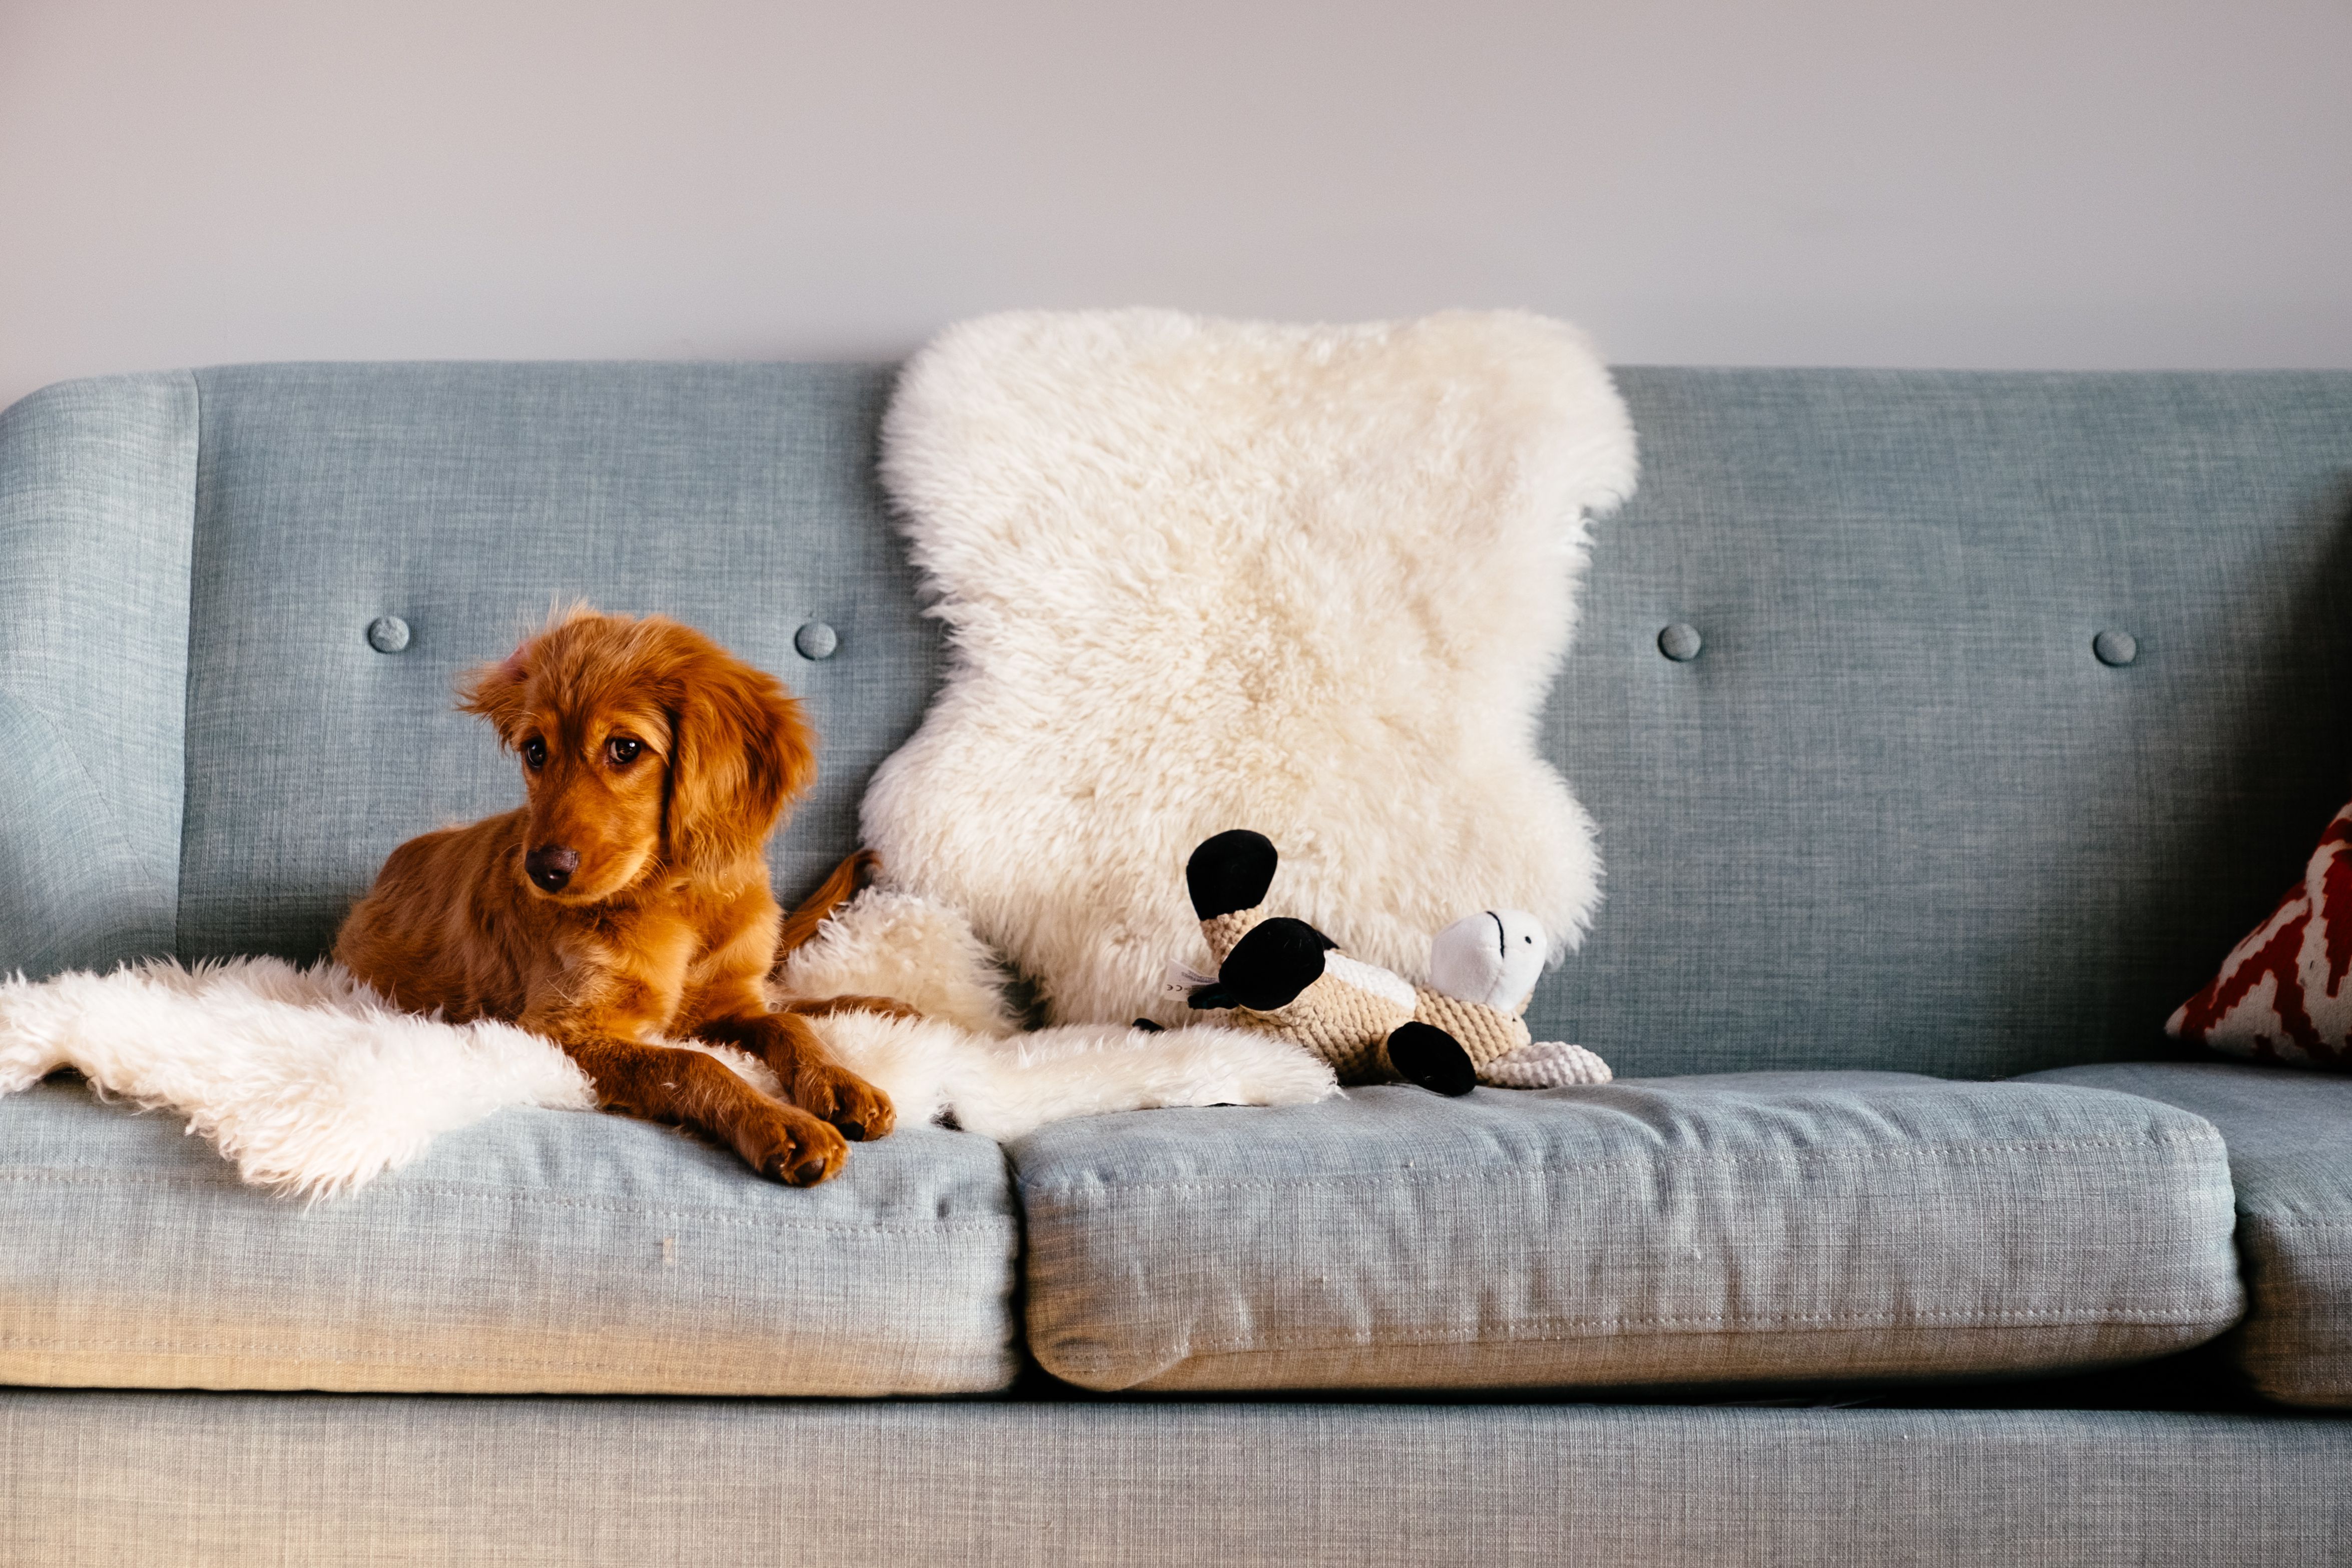 Choosing Pet friendly Furniture Options